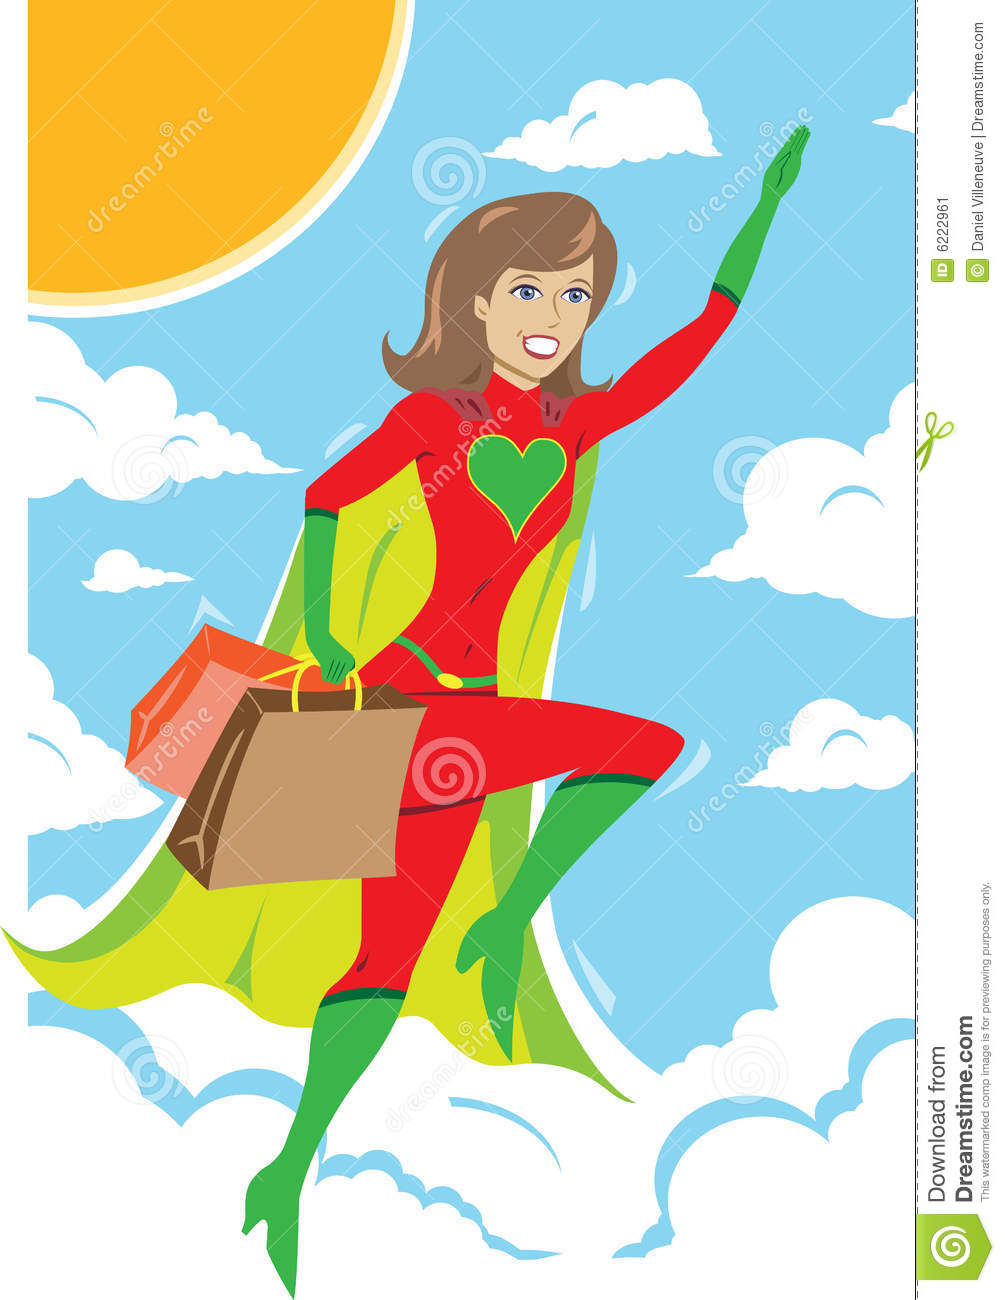 Superhero Girl Flying With Shopping Bags Stock Image   Image  6222961